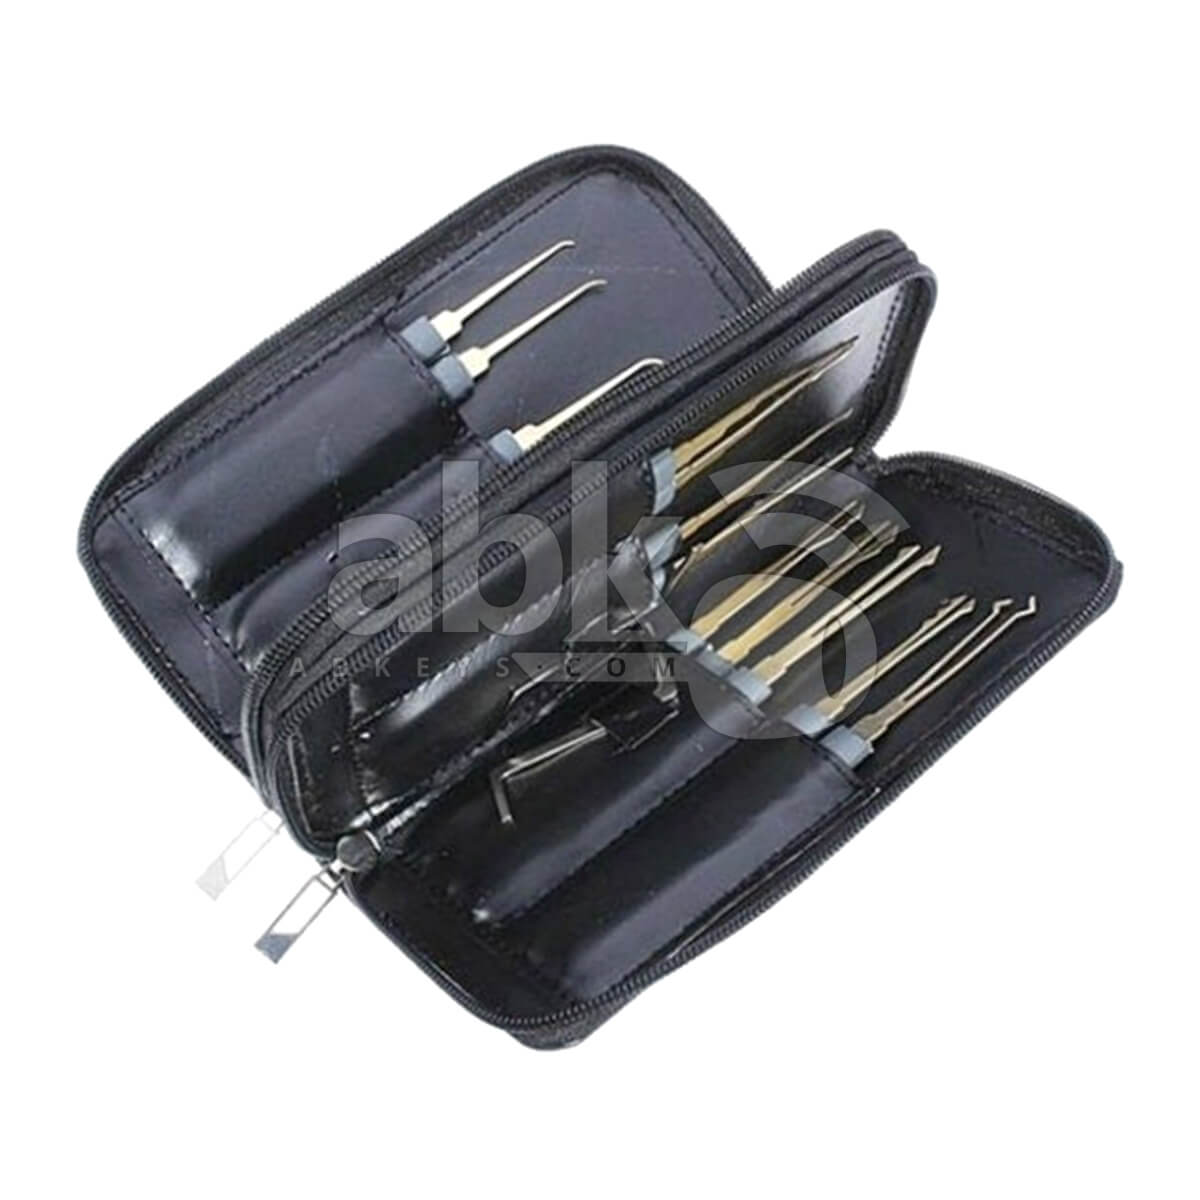 Goso Lock Picking Tools Set - Locksmith Pick Kit 21Pcs With Case - ABK-940 - ABKEYS.COM